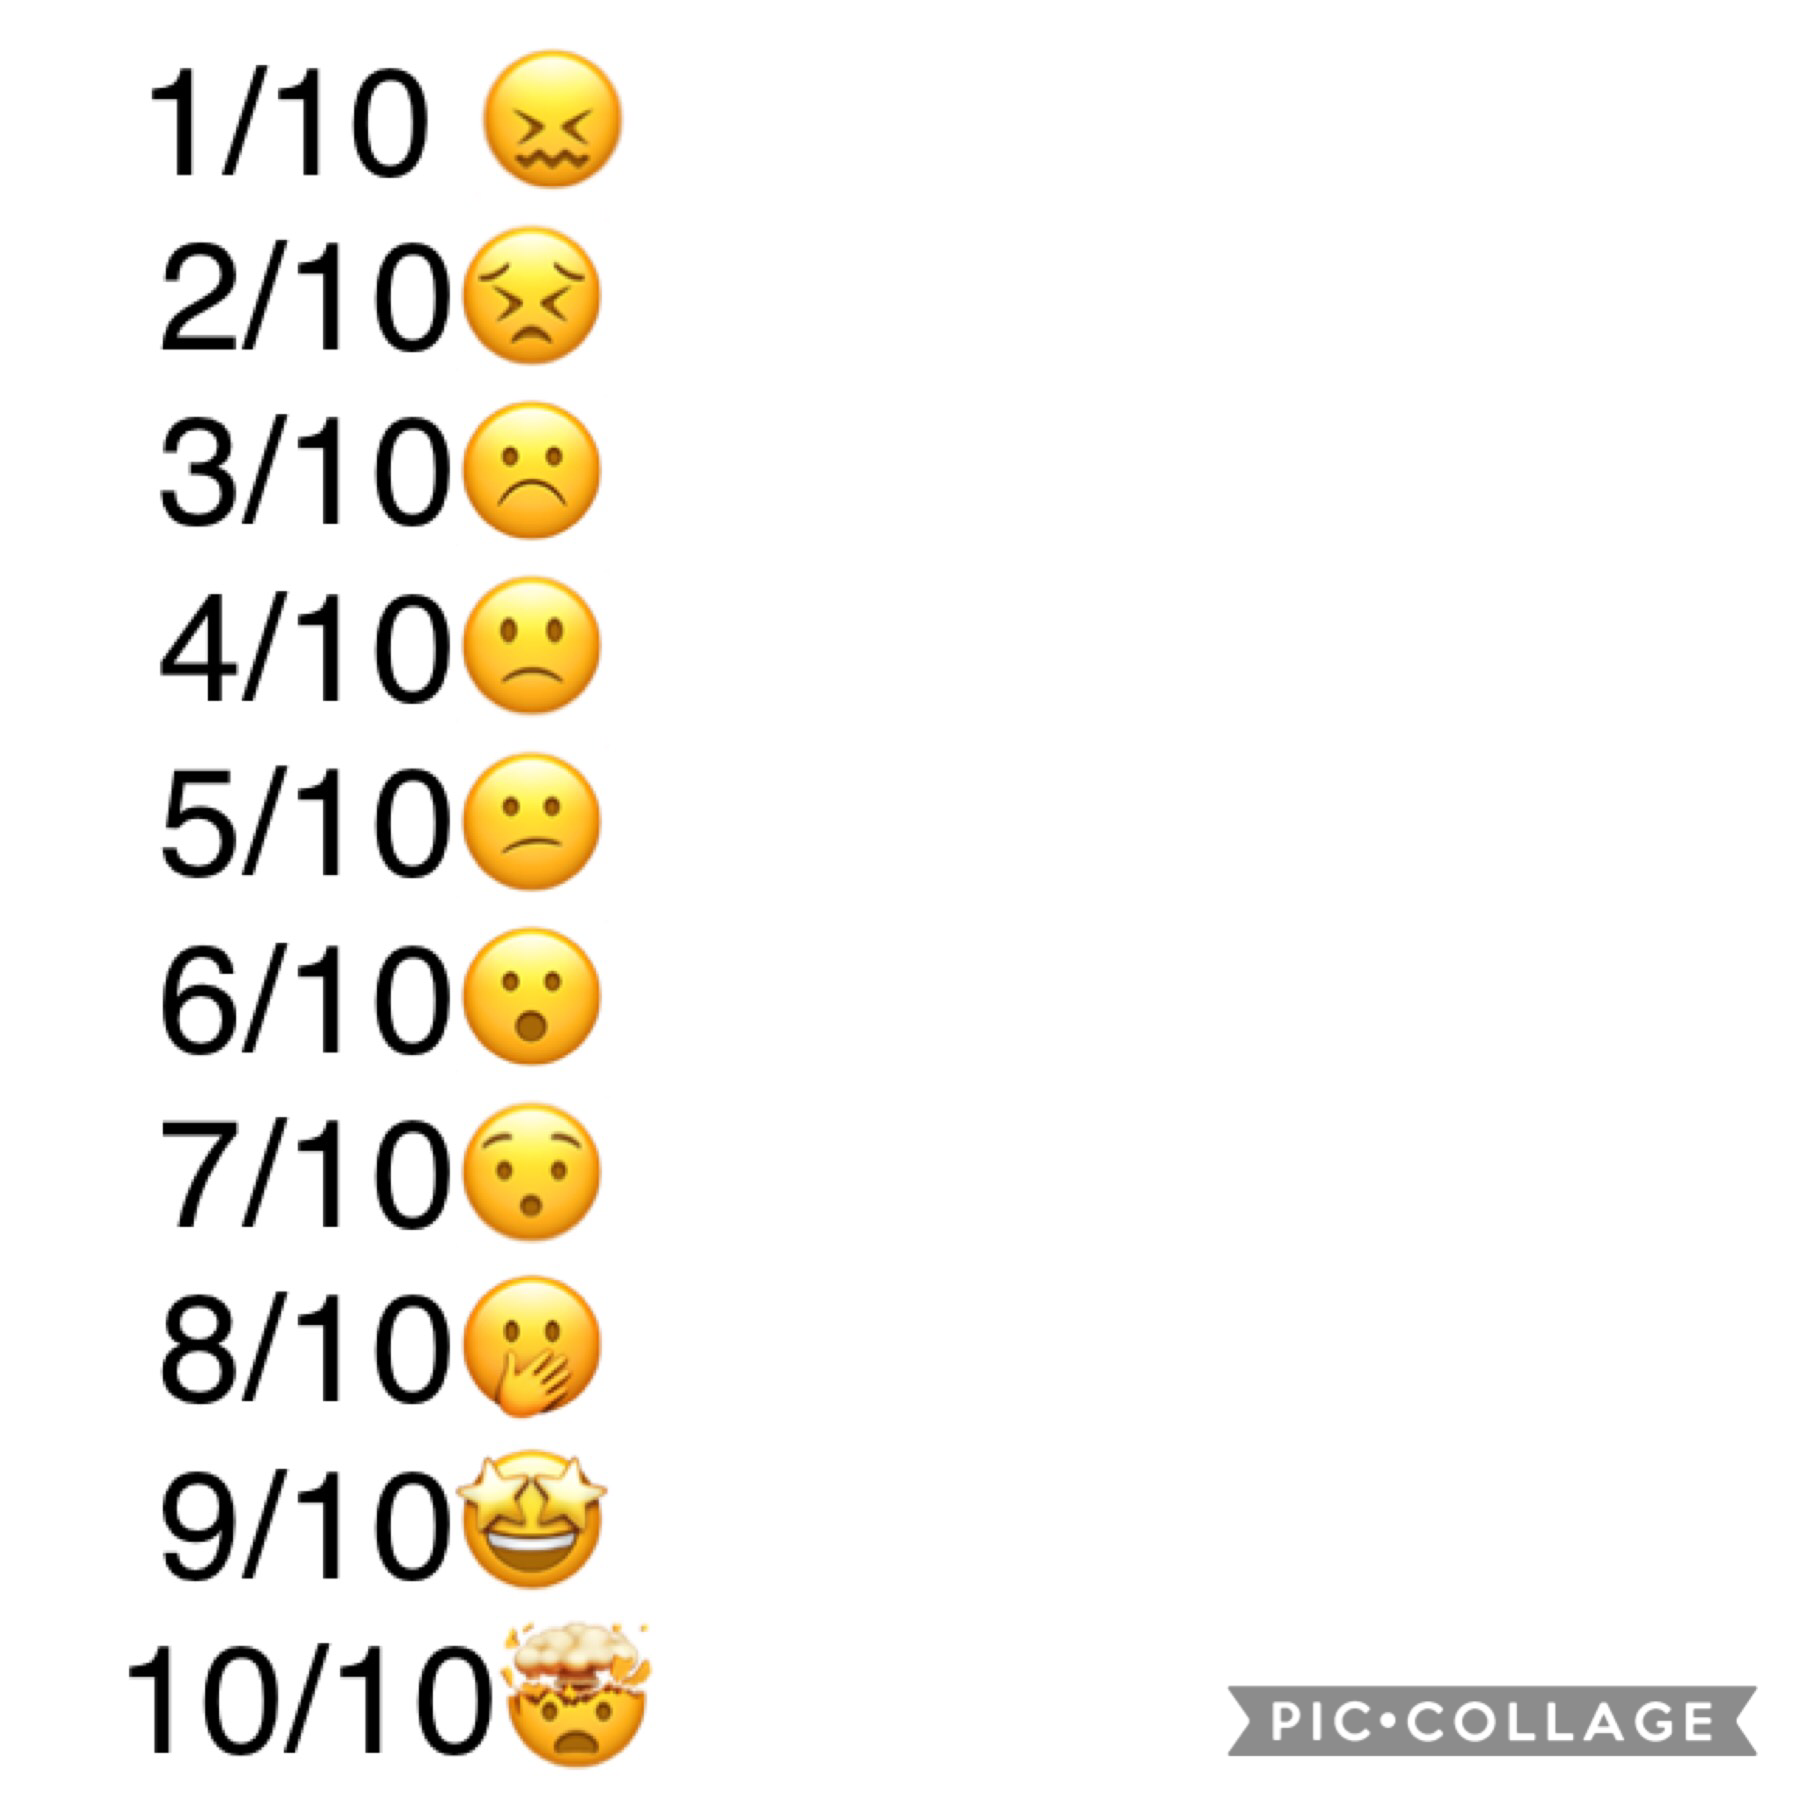 My mood of them in Emojis!